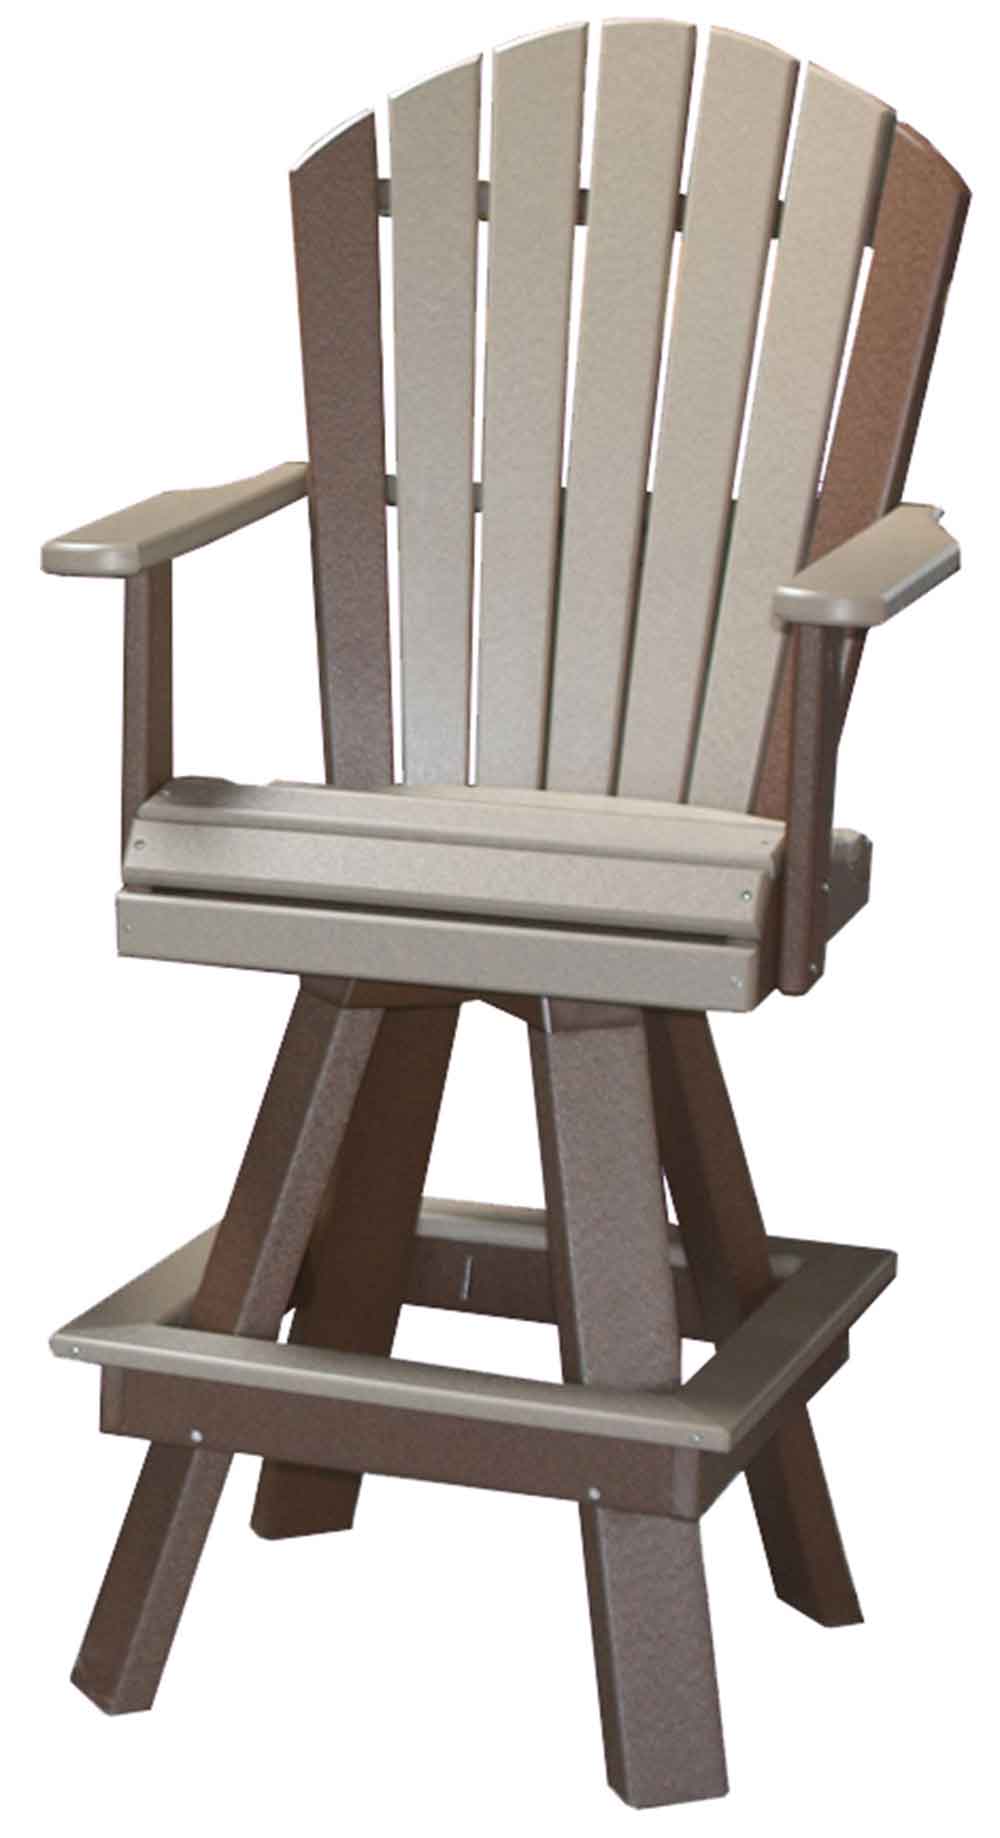 Classic-Chairs3-CSL.jpg